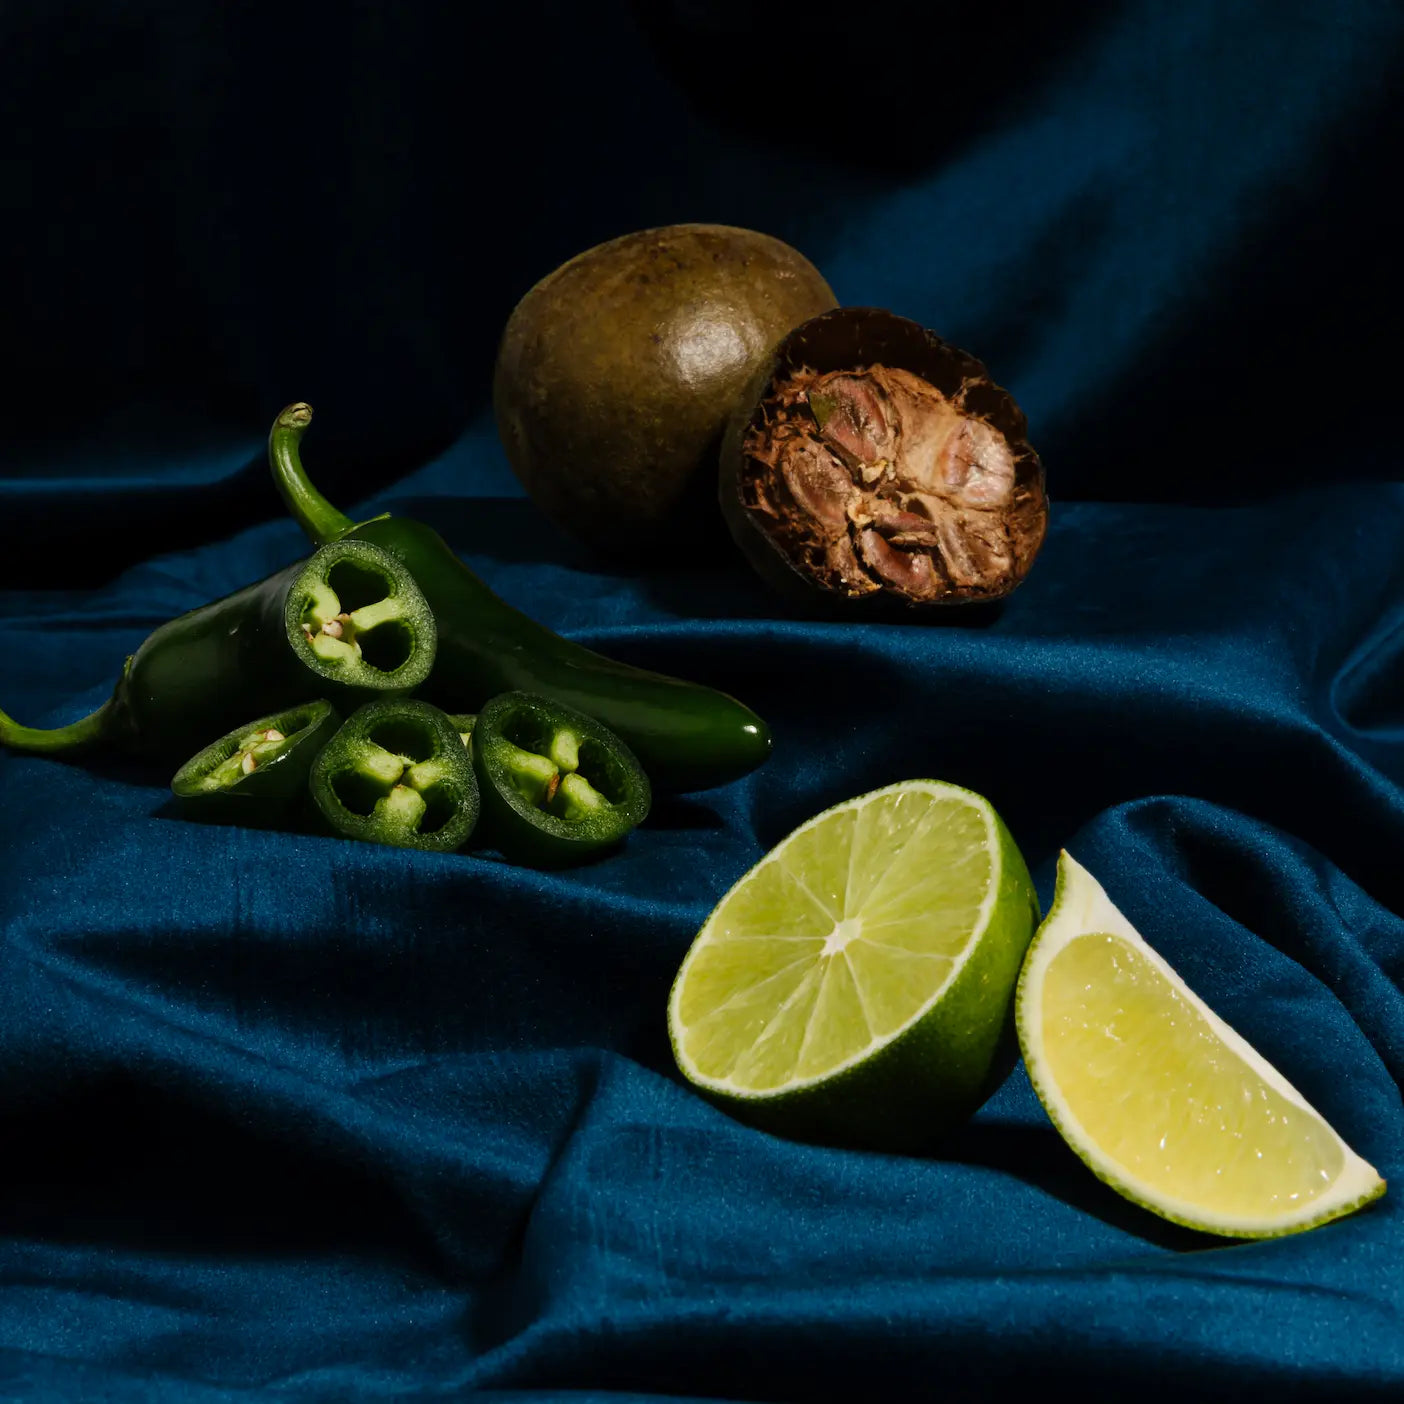 Skinny Spicy Margarita Sachet ingredients on blue fabric